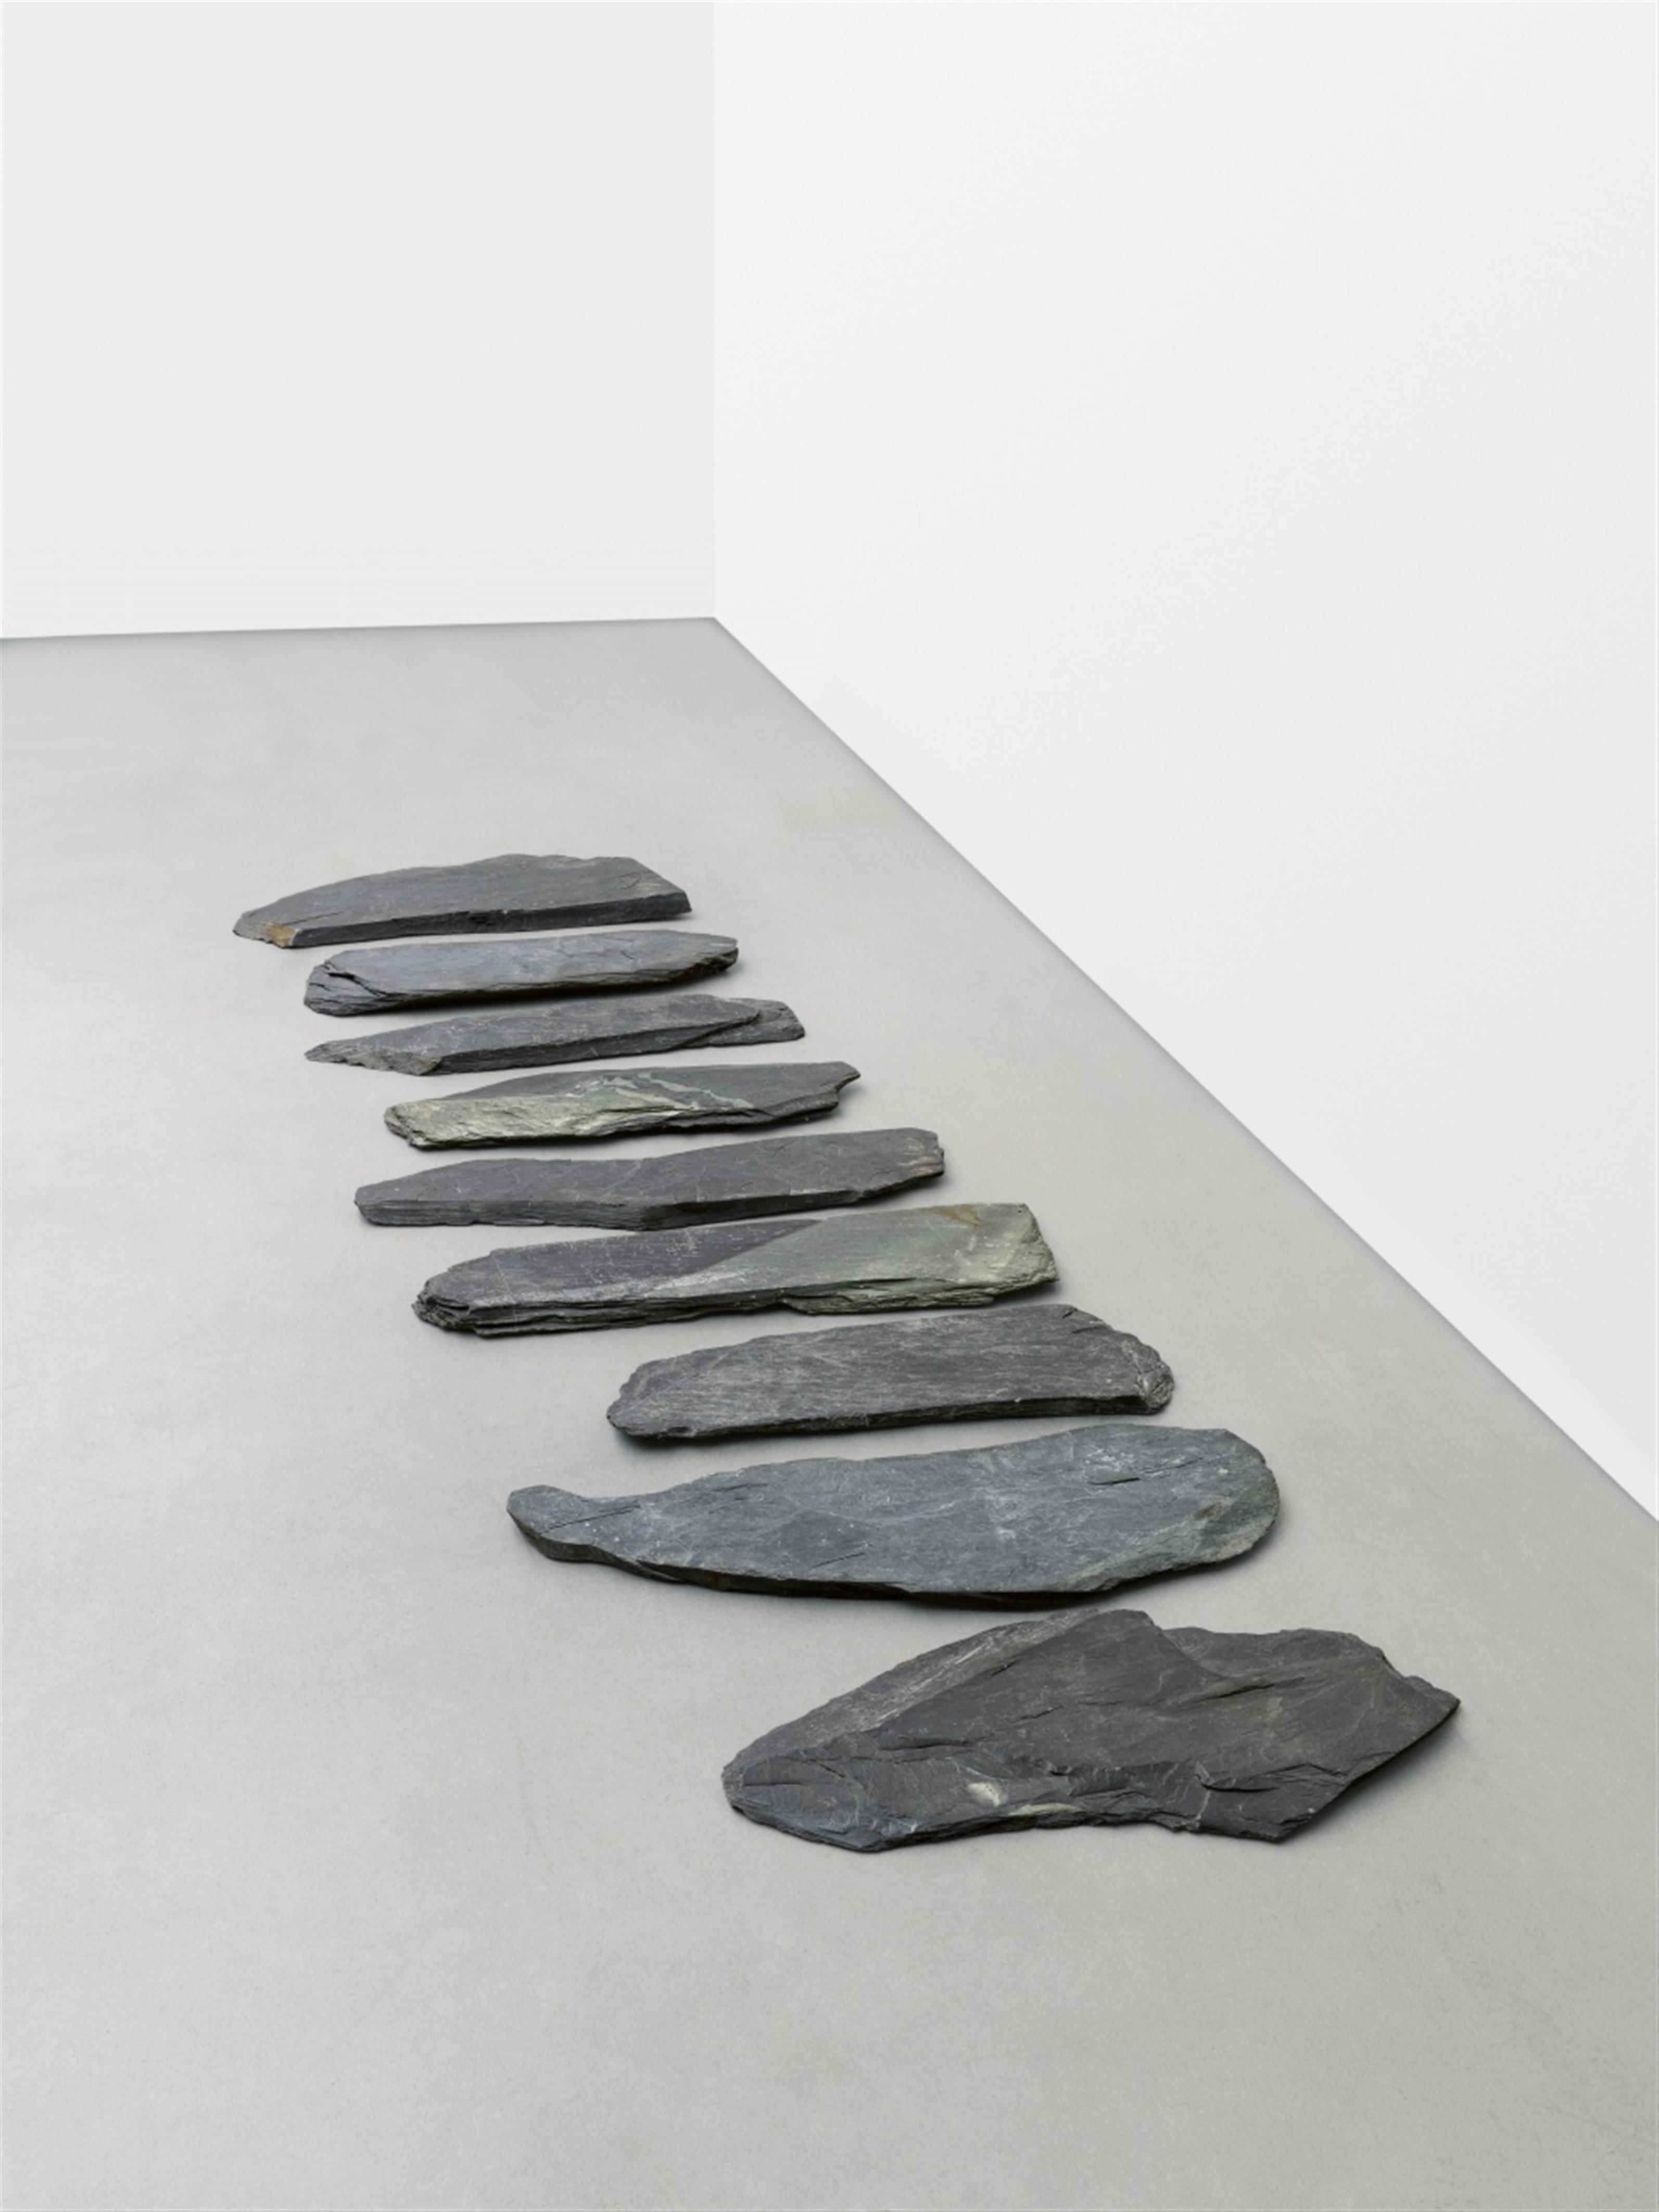 Richard Long - 9 Stones